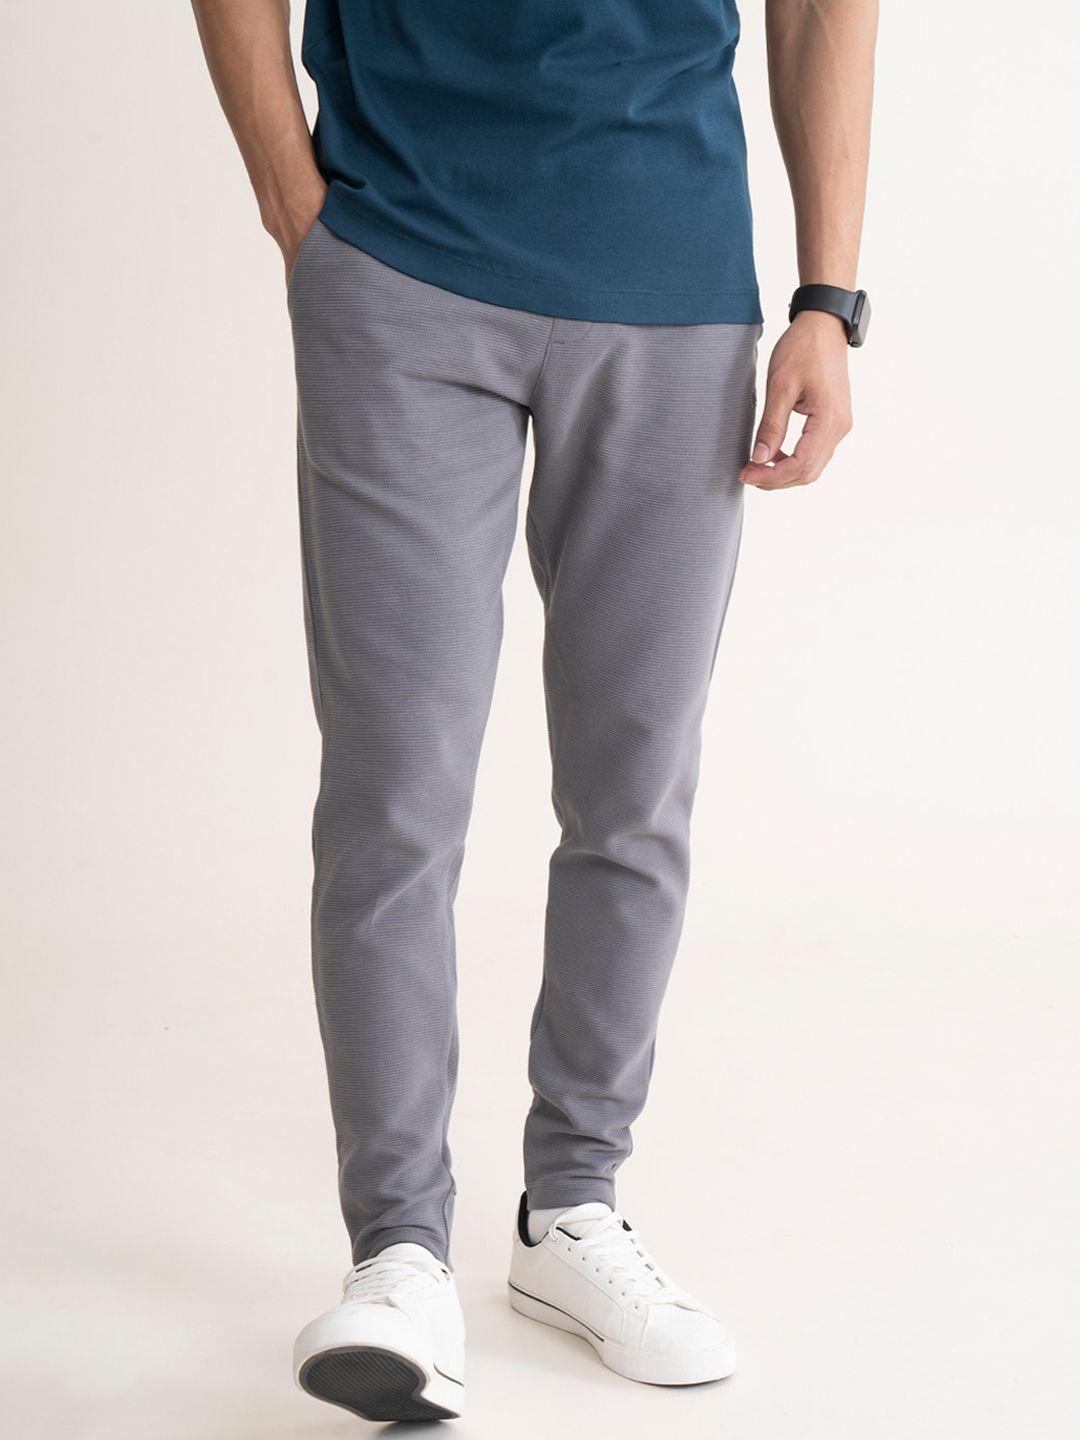 damensch men grey solid pure cotton track pants